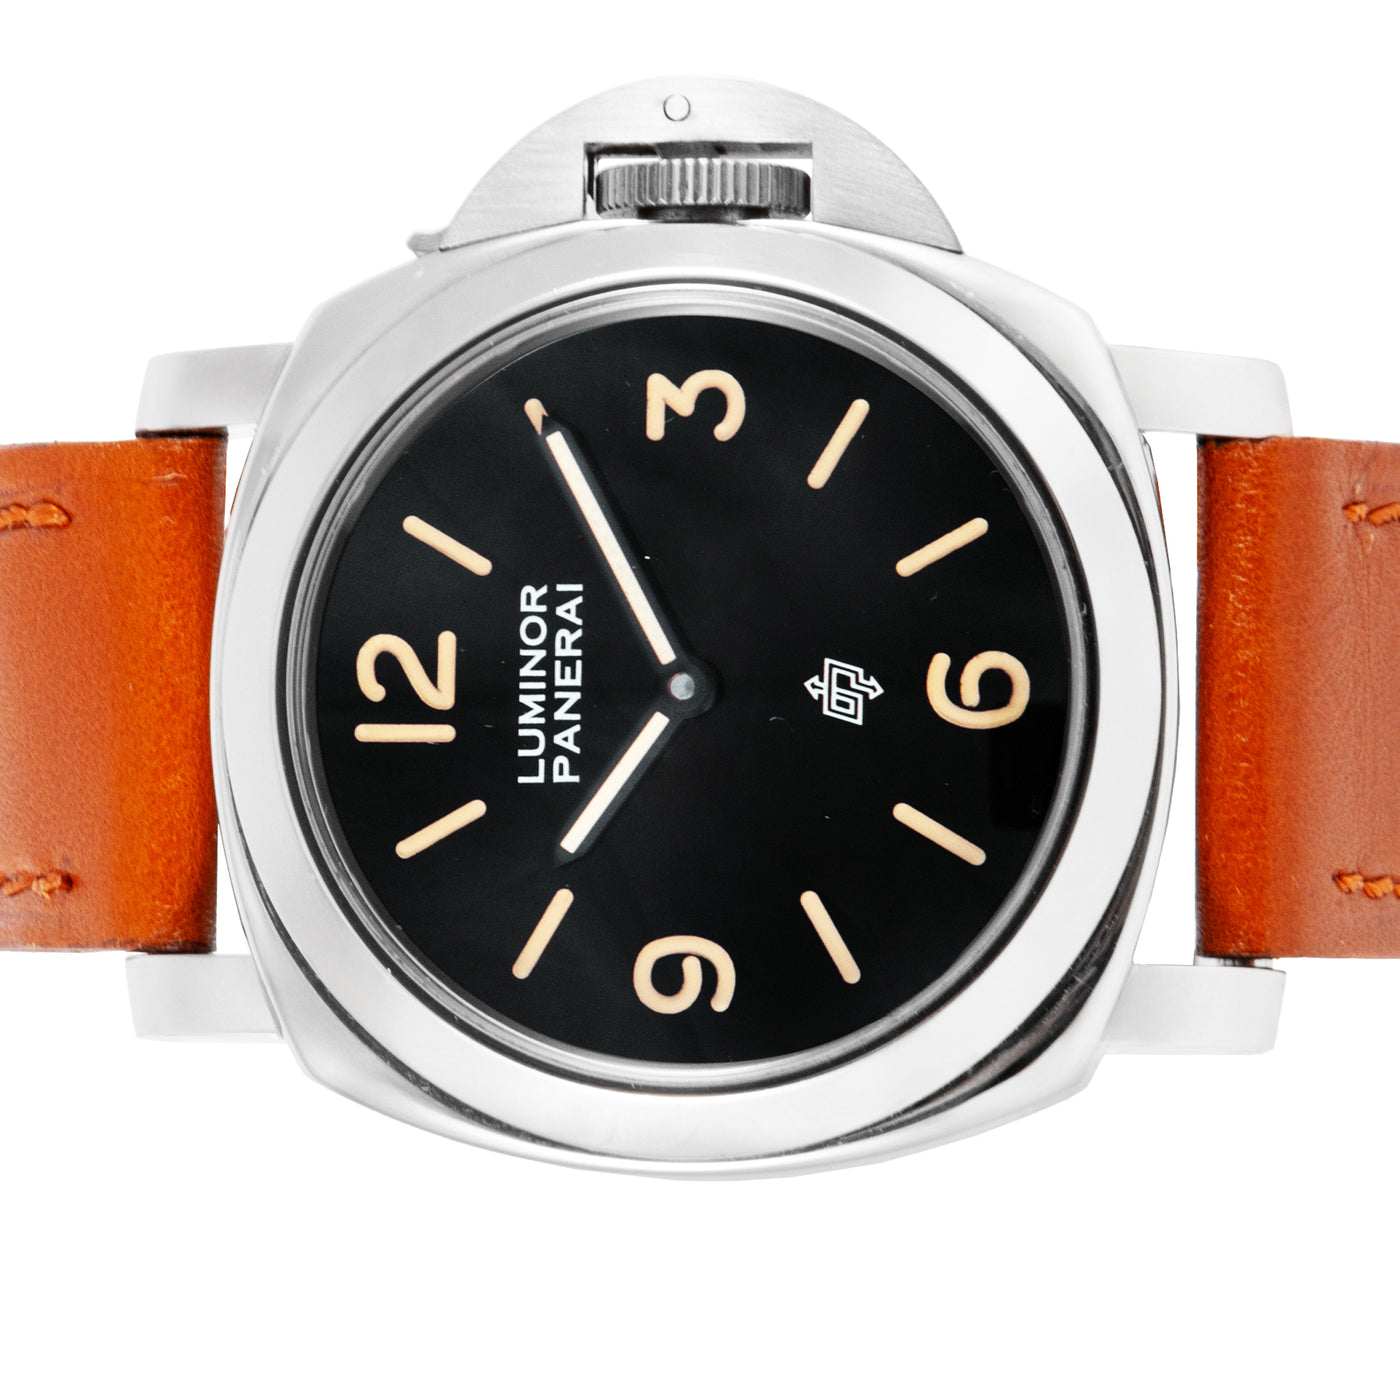 Officine Panerai Luminor Pre-Vendome "Sylvester Stallone" 5218-201/A | Timepiece360